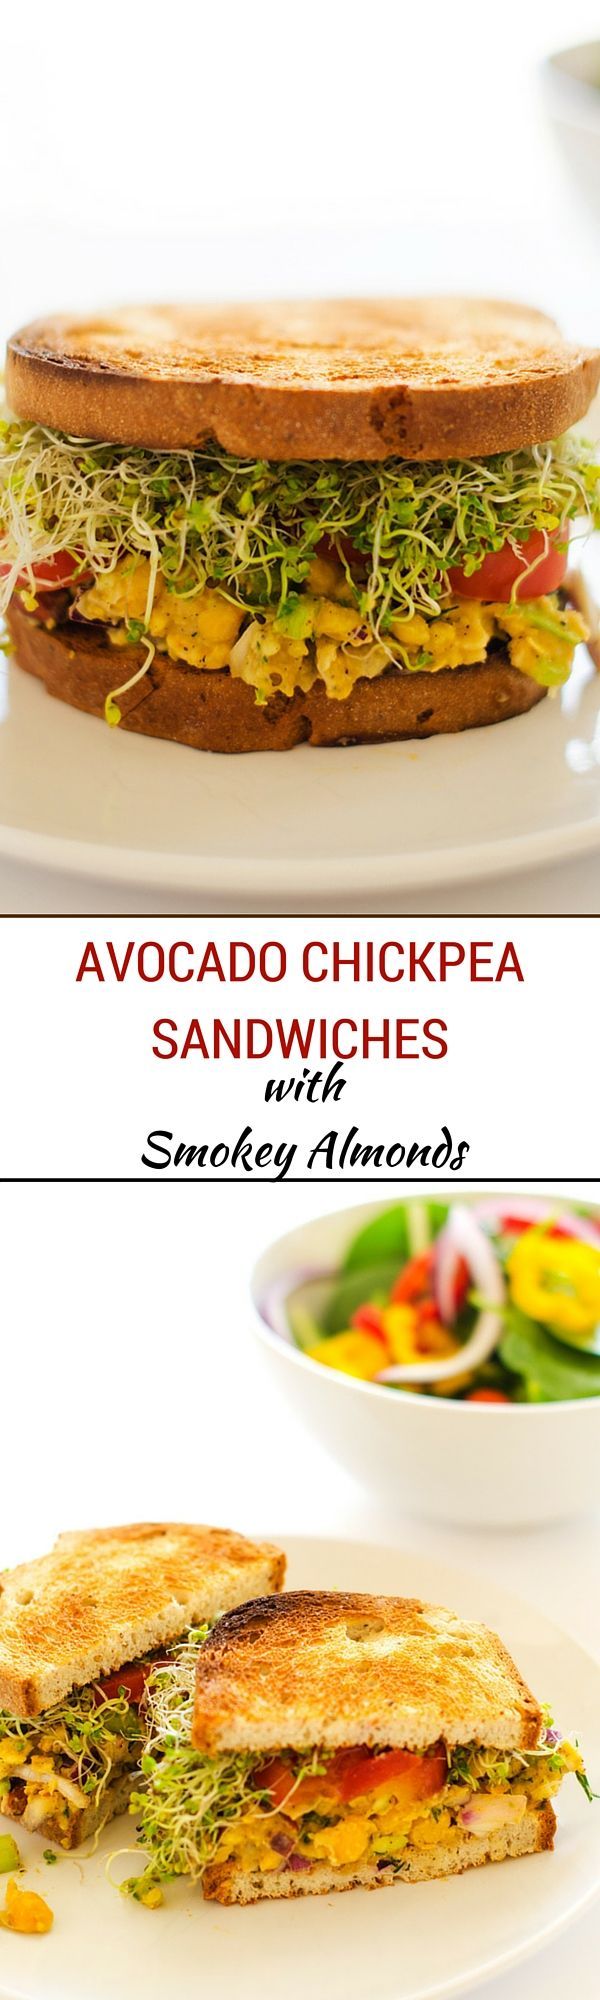 Avocado Chickpea Sandwiches with Smokey Almonds